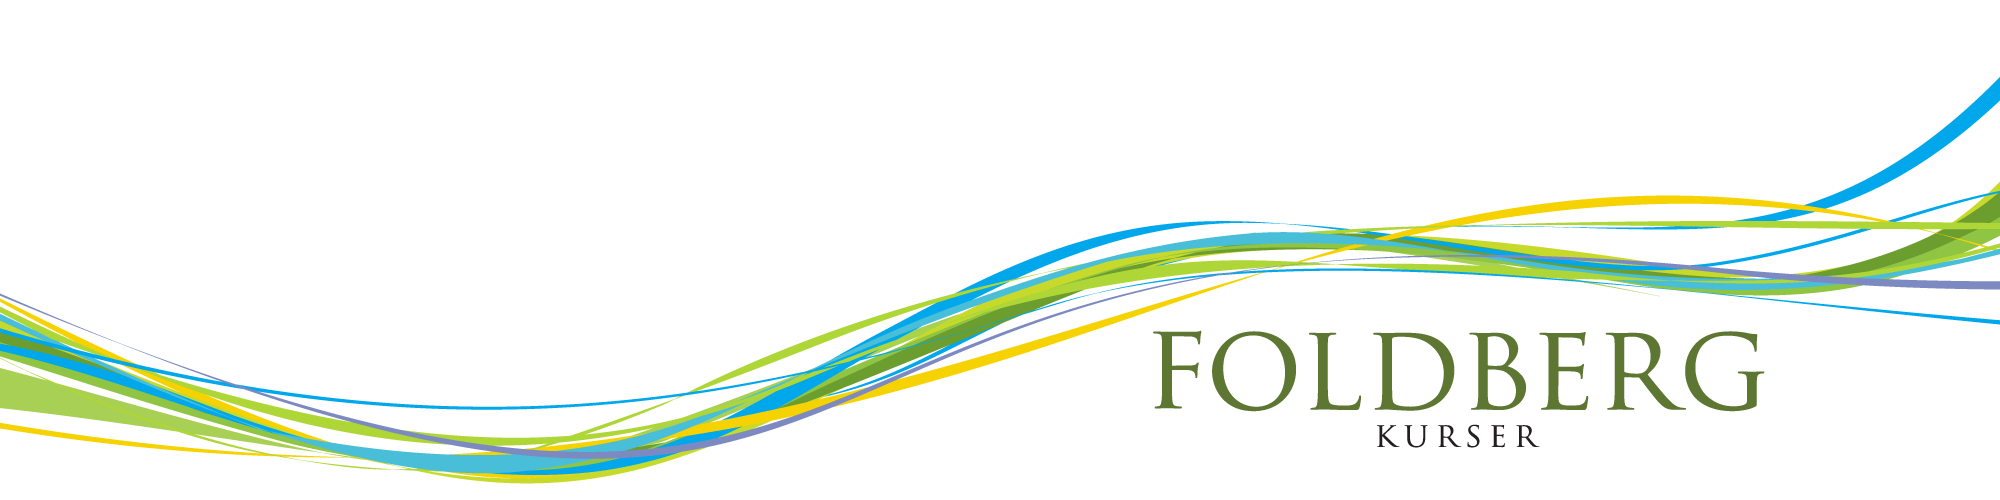 Foldberg kurser logo png